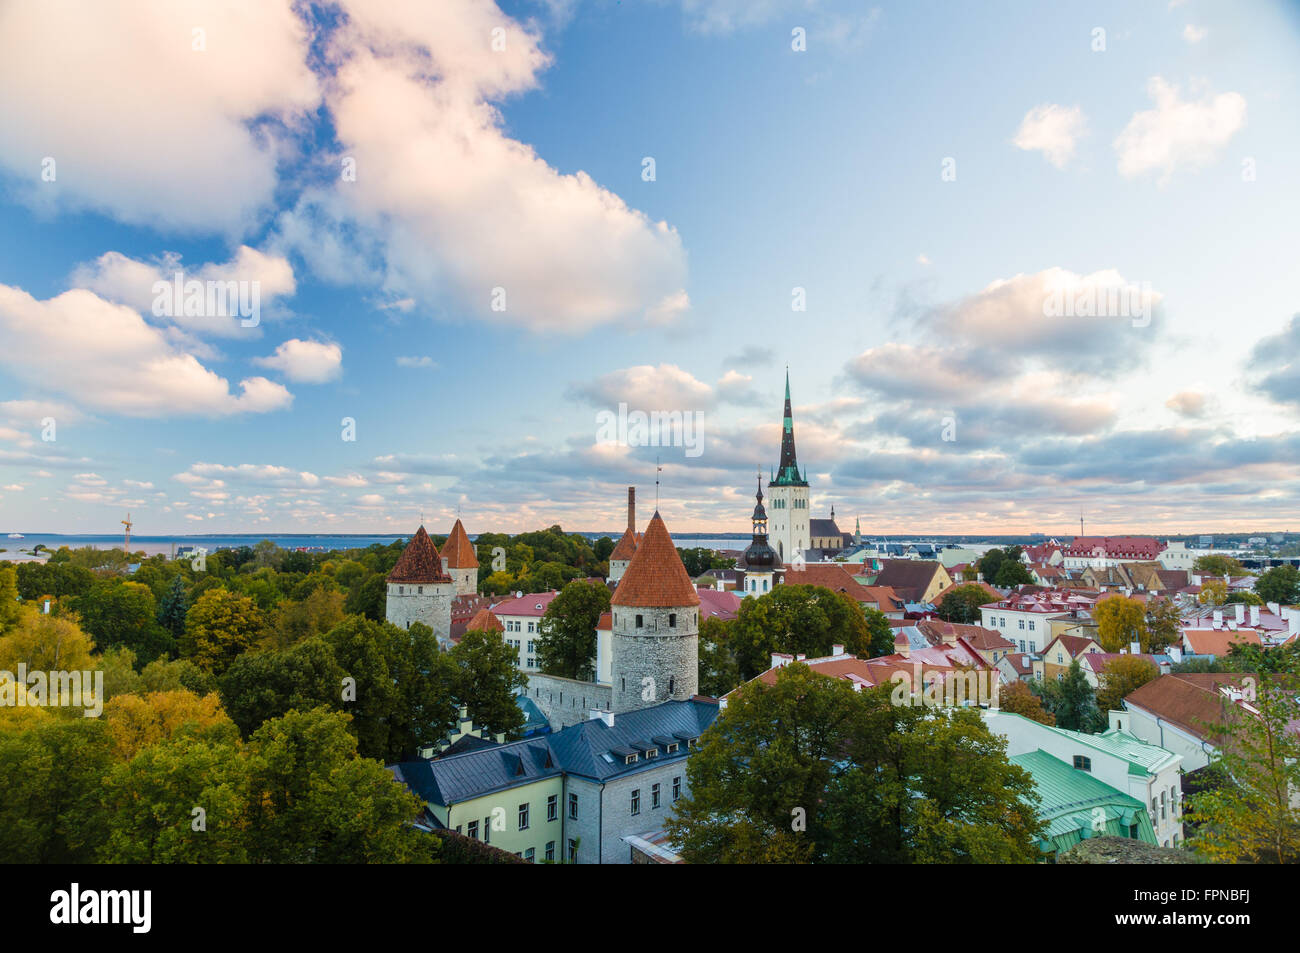 Vista mañana otoñal de la ciudad vieja de Tallinn, Estonia. La Iglesia Oleviste y torres medievales Foto de stock